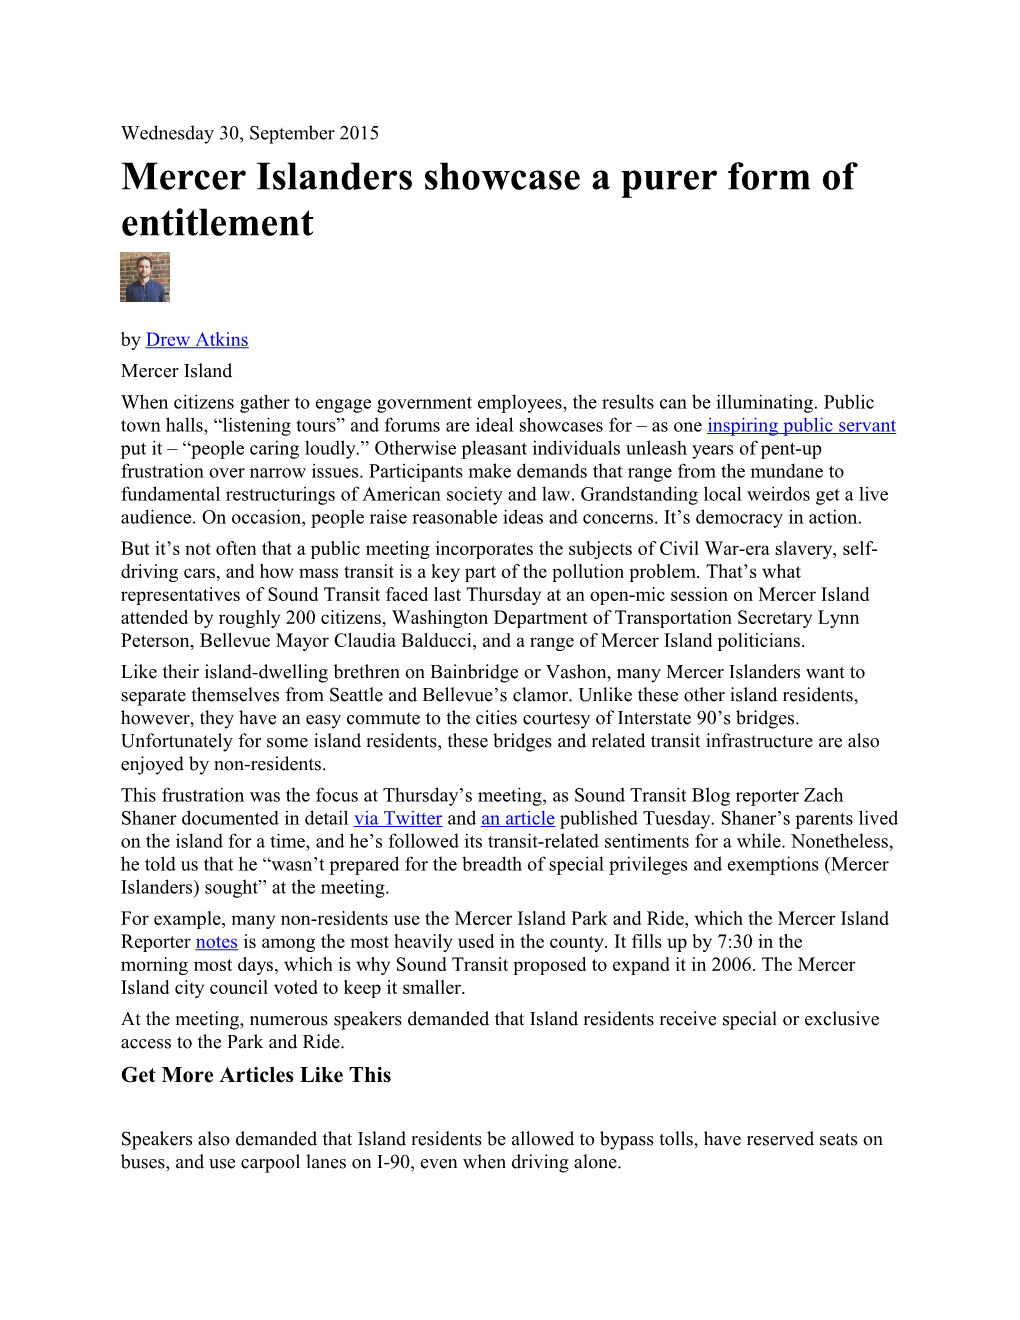 Mercer Islanders Showcase a Purer Form of Entitlement